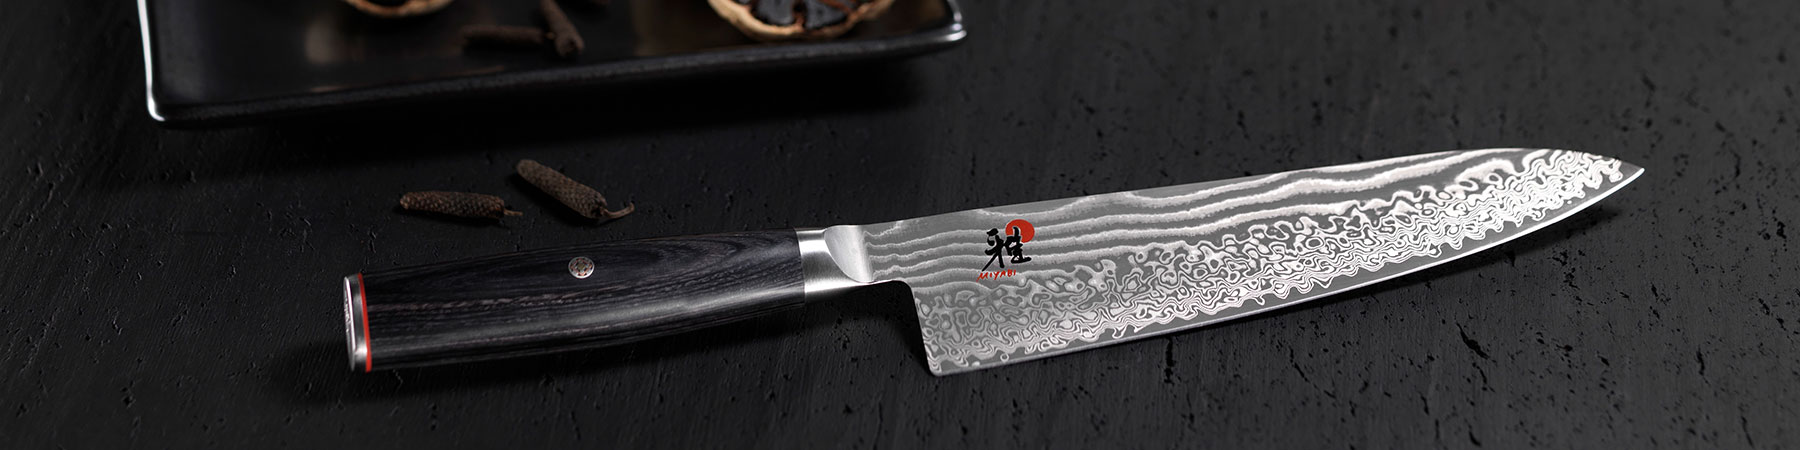 Miyabi kniver